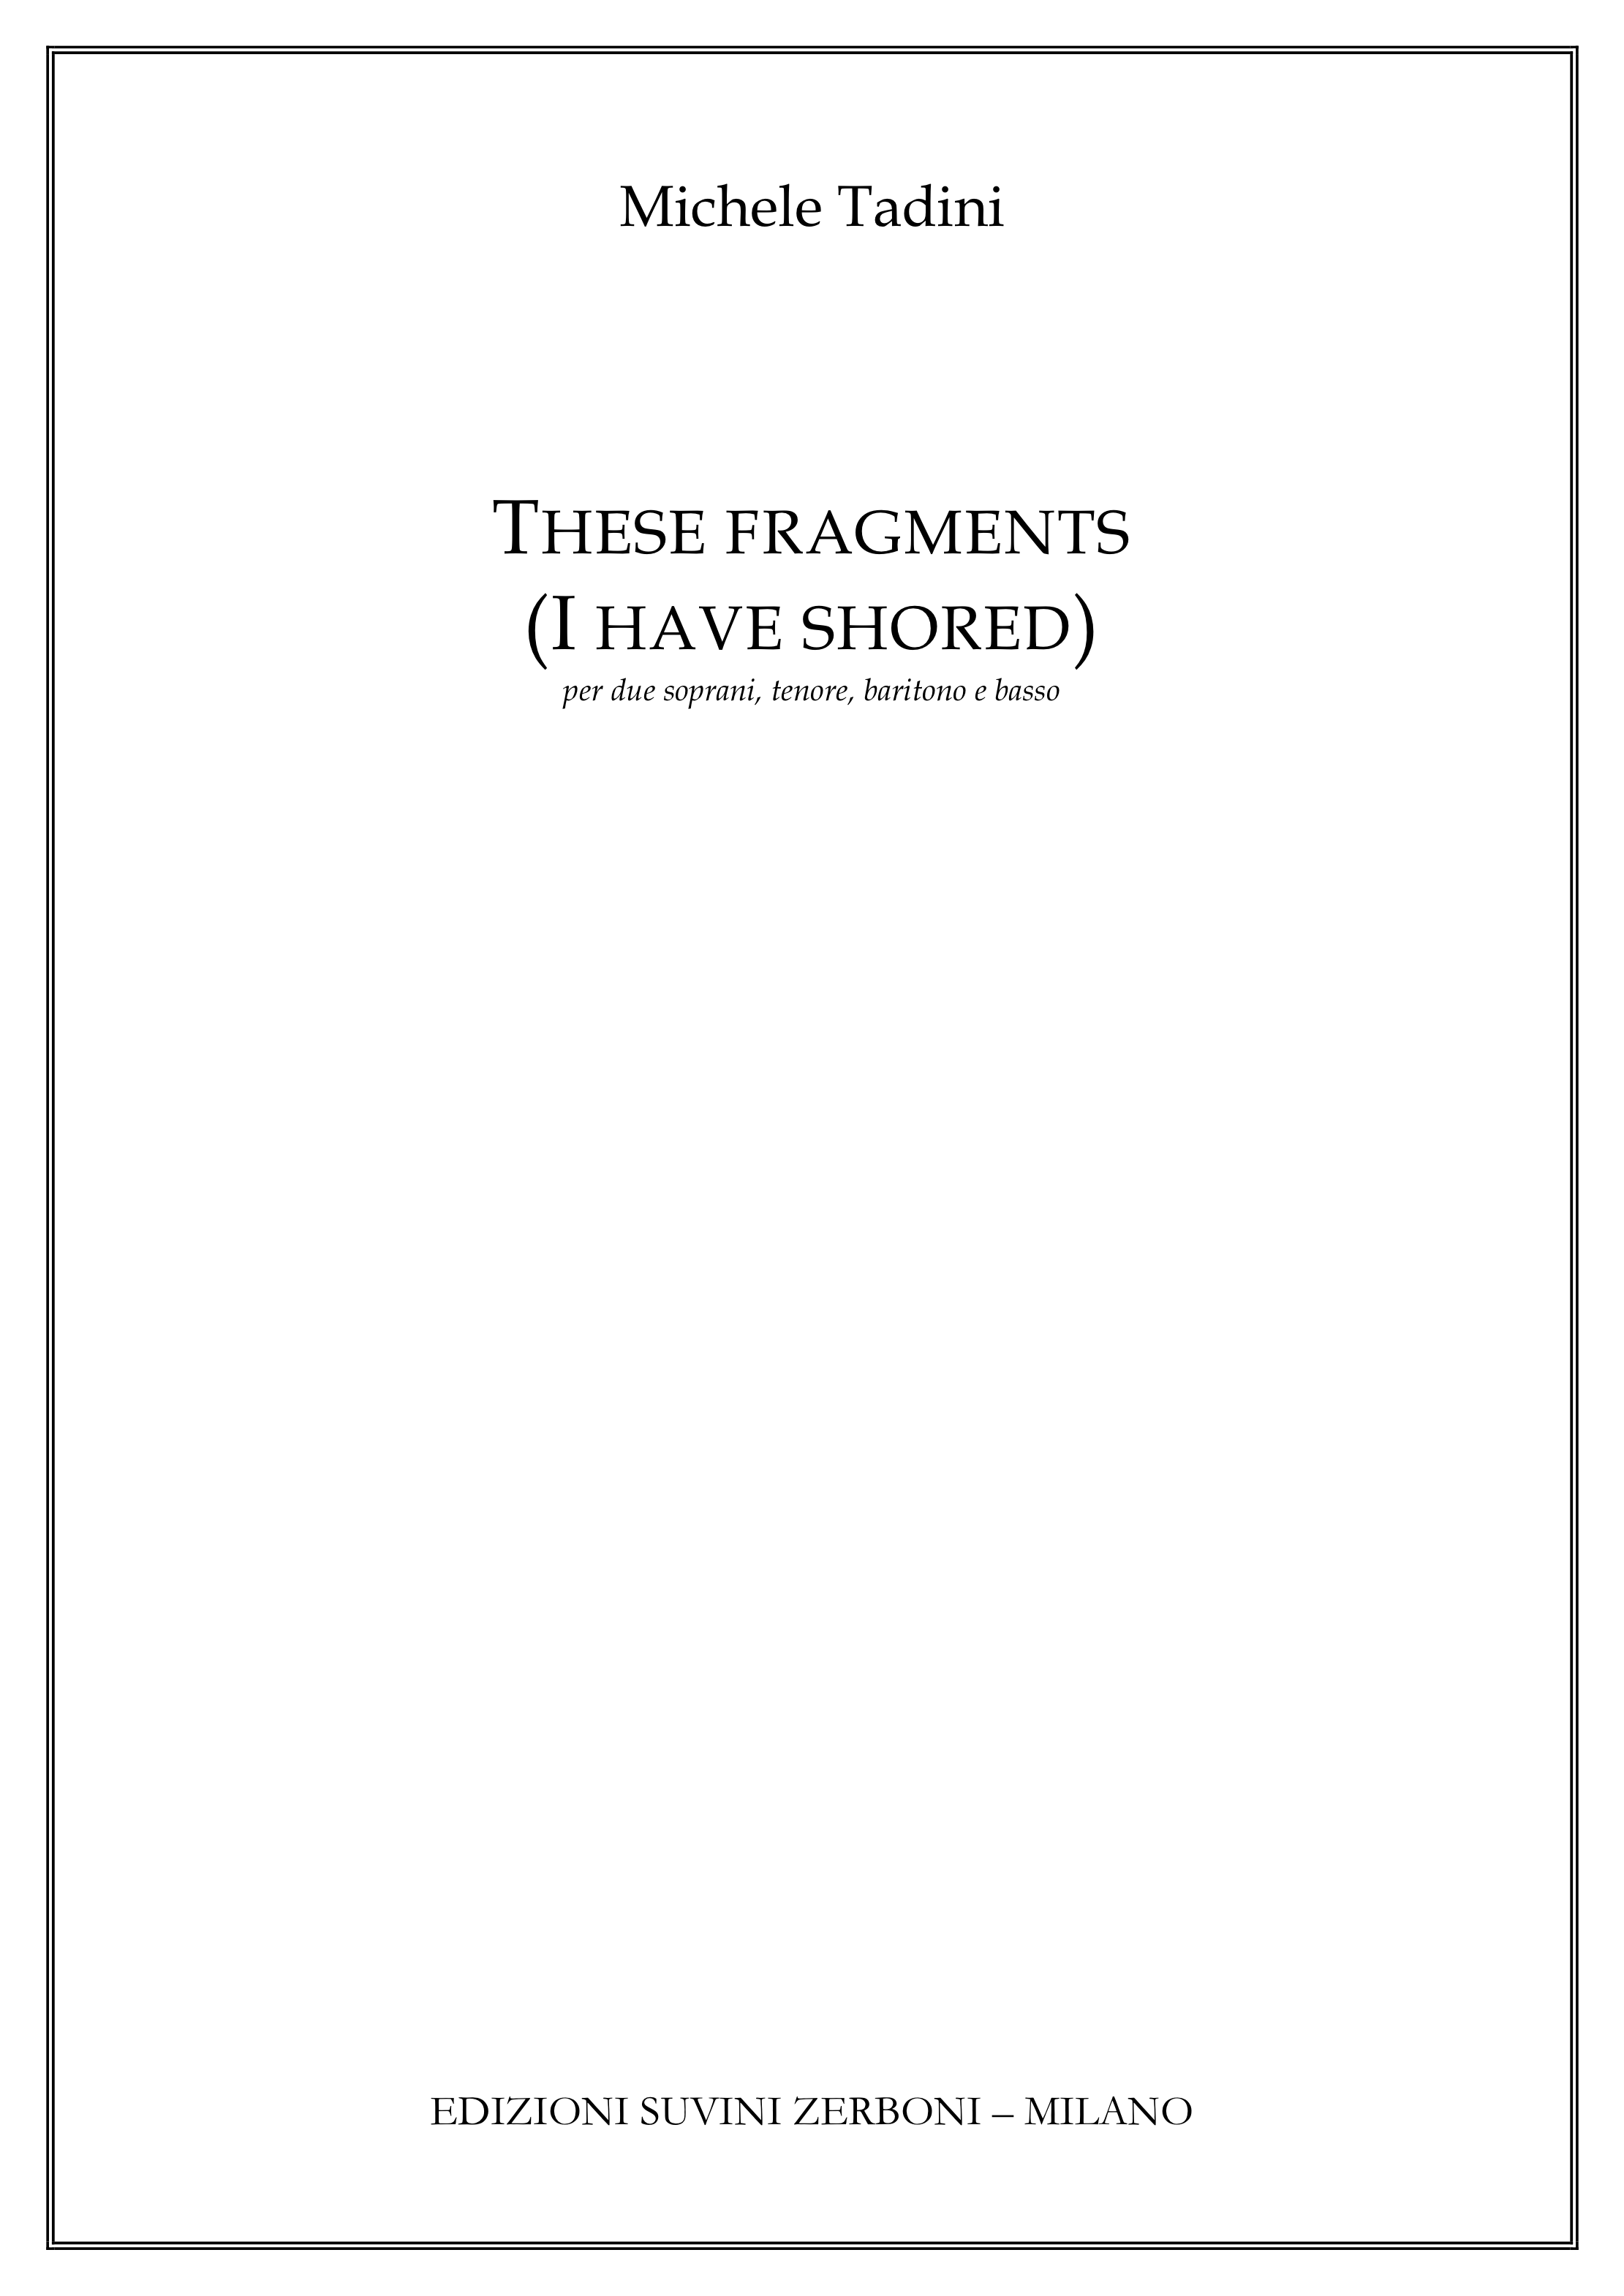 These fragments_Tadini 1